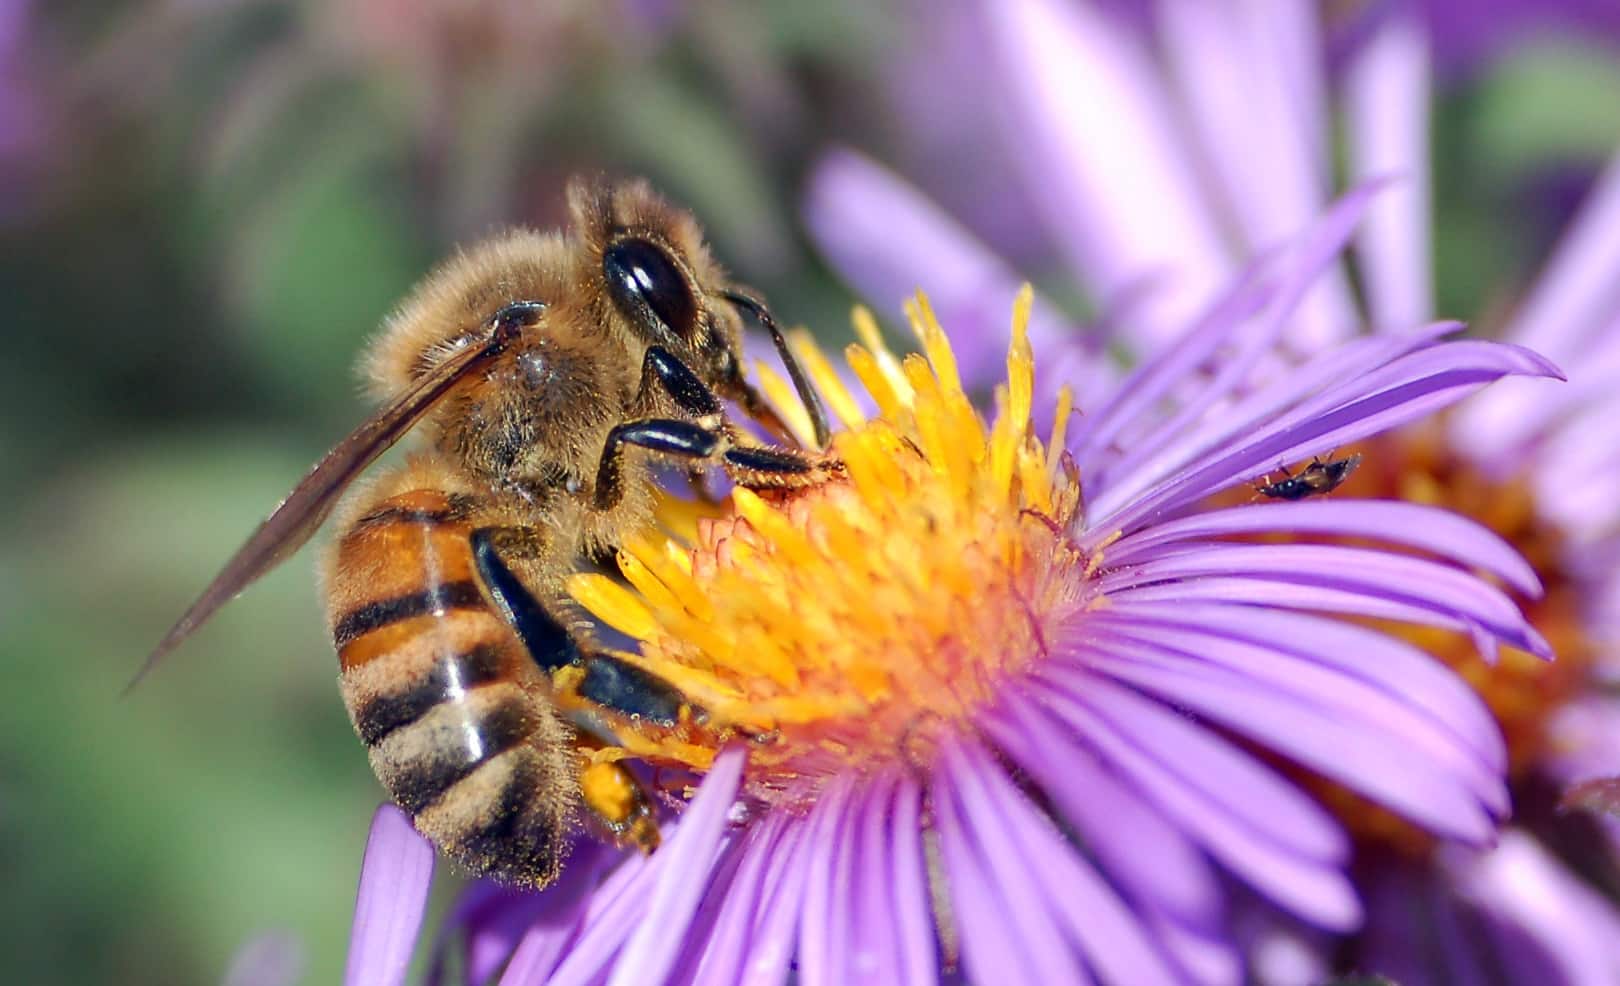 Western Honey Bee (Apis mellifera) Dimensions & Drawings